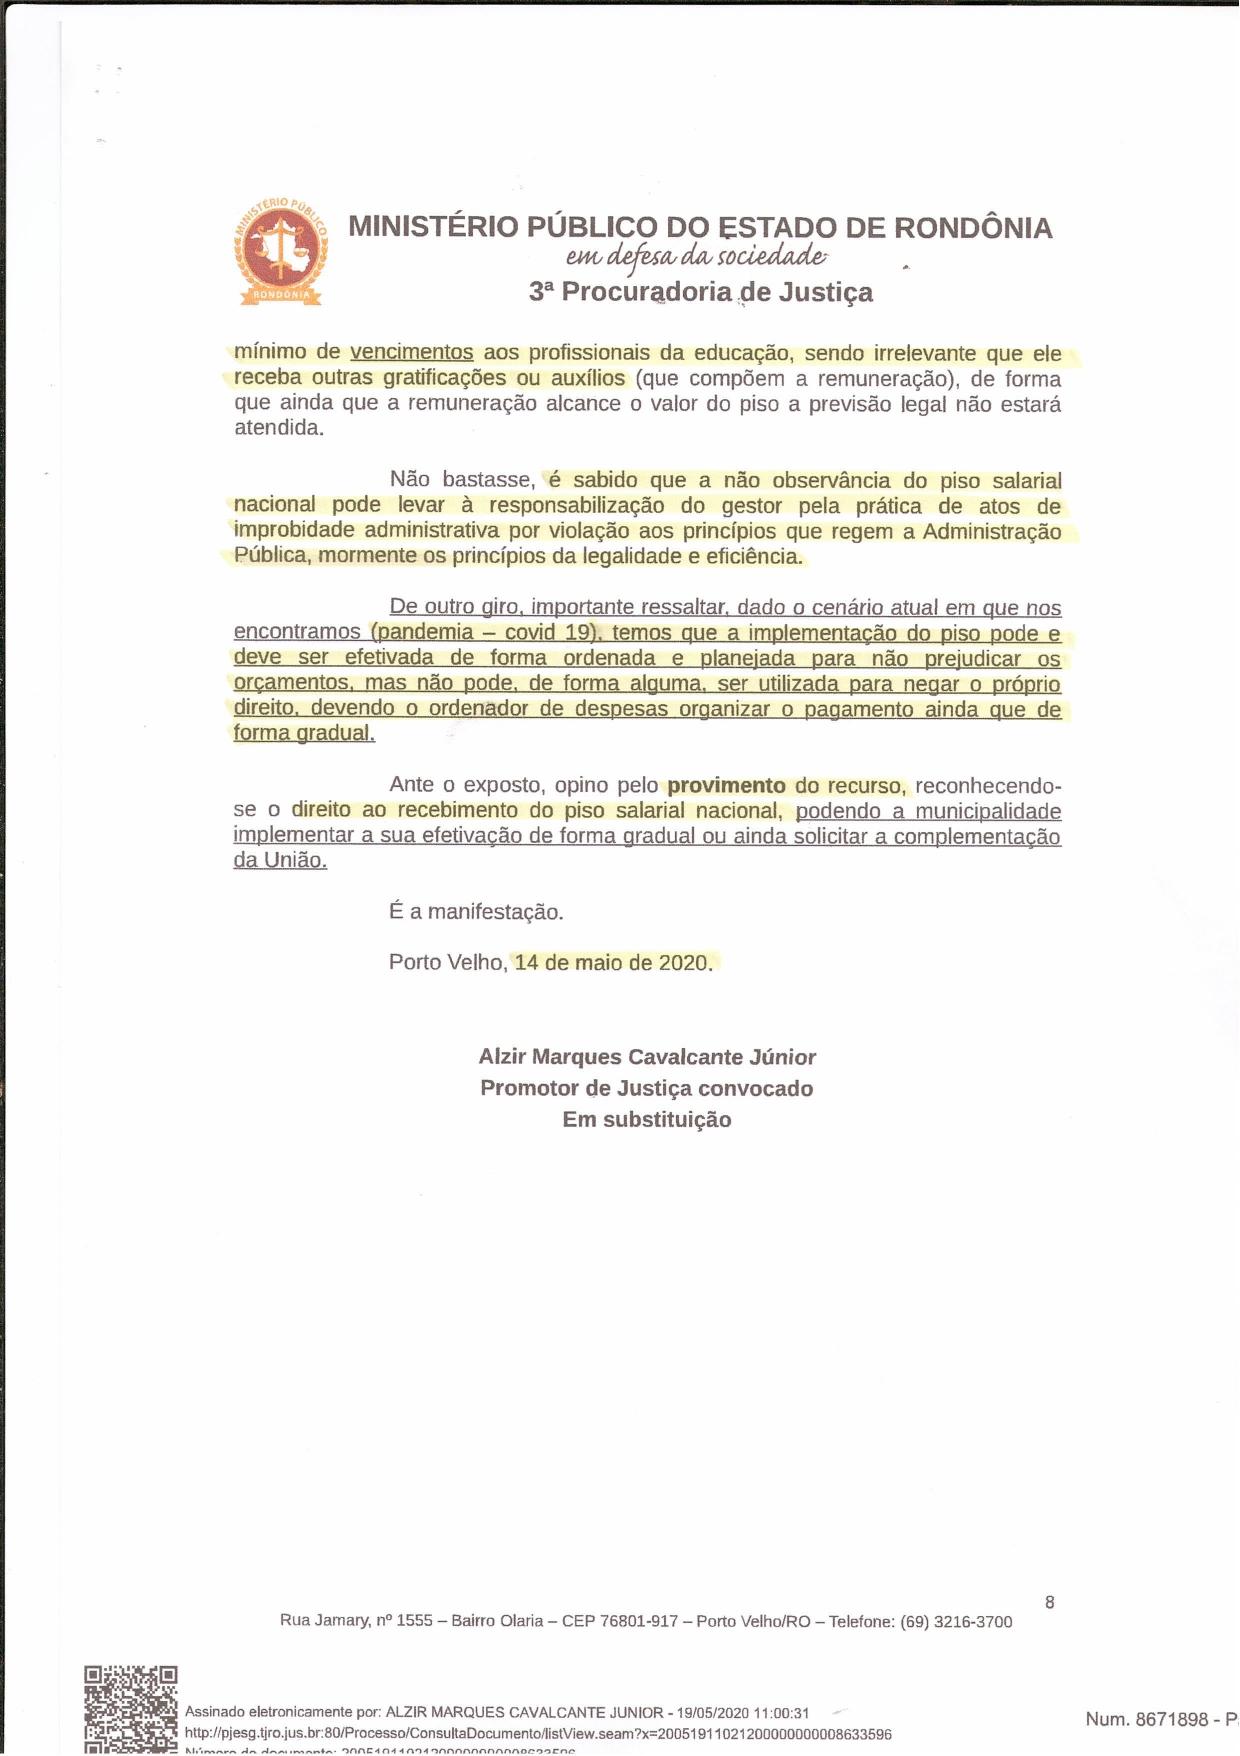 PISO SALARIAL DOS PROFESSORES-ROLIM DE MOURA – RO